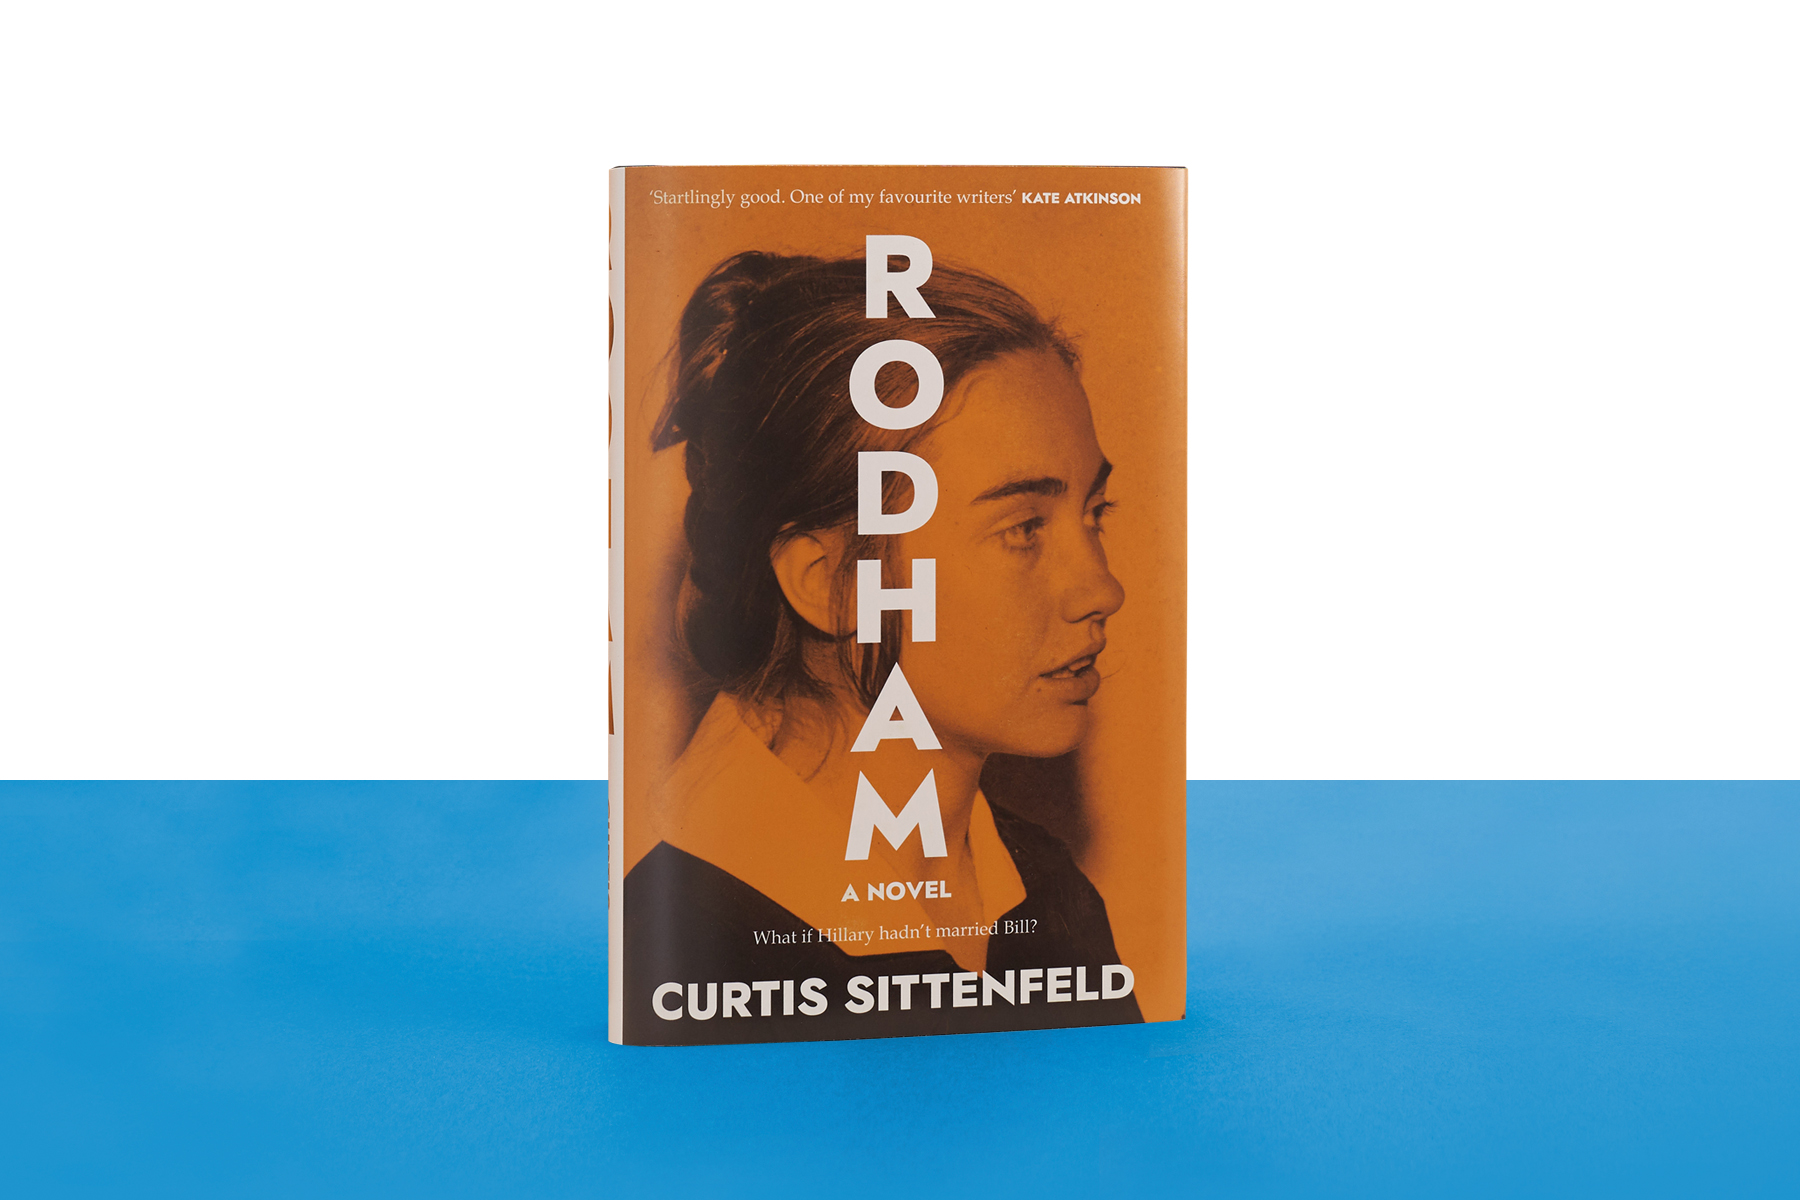 Curtis Sittenfeld's new novel Rodham.